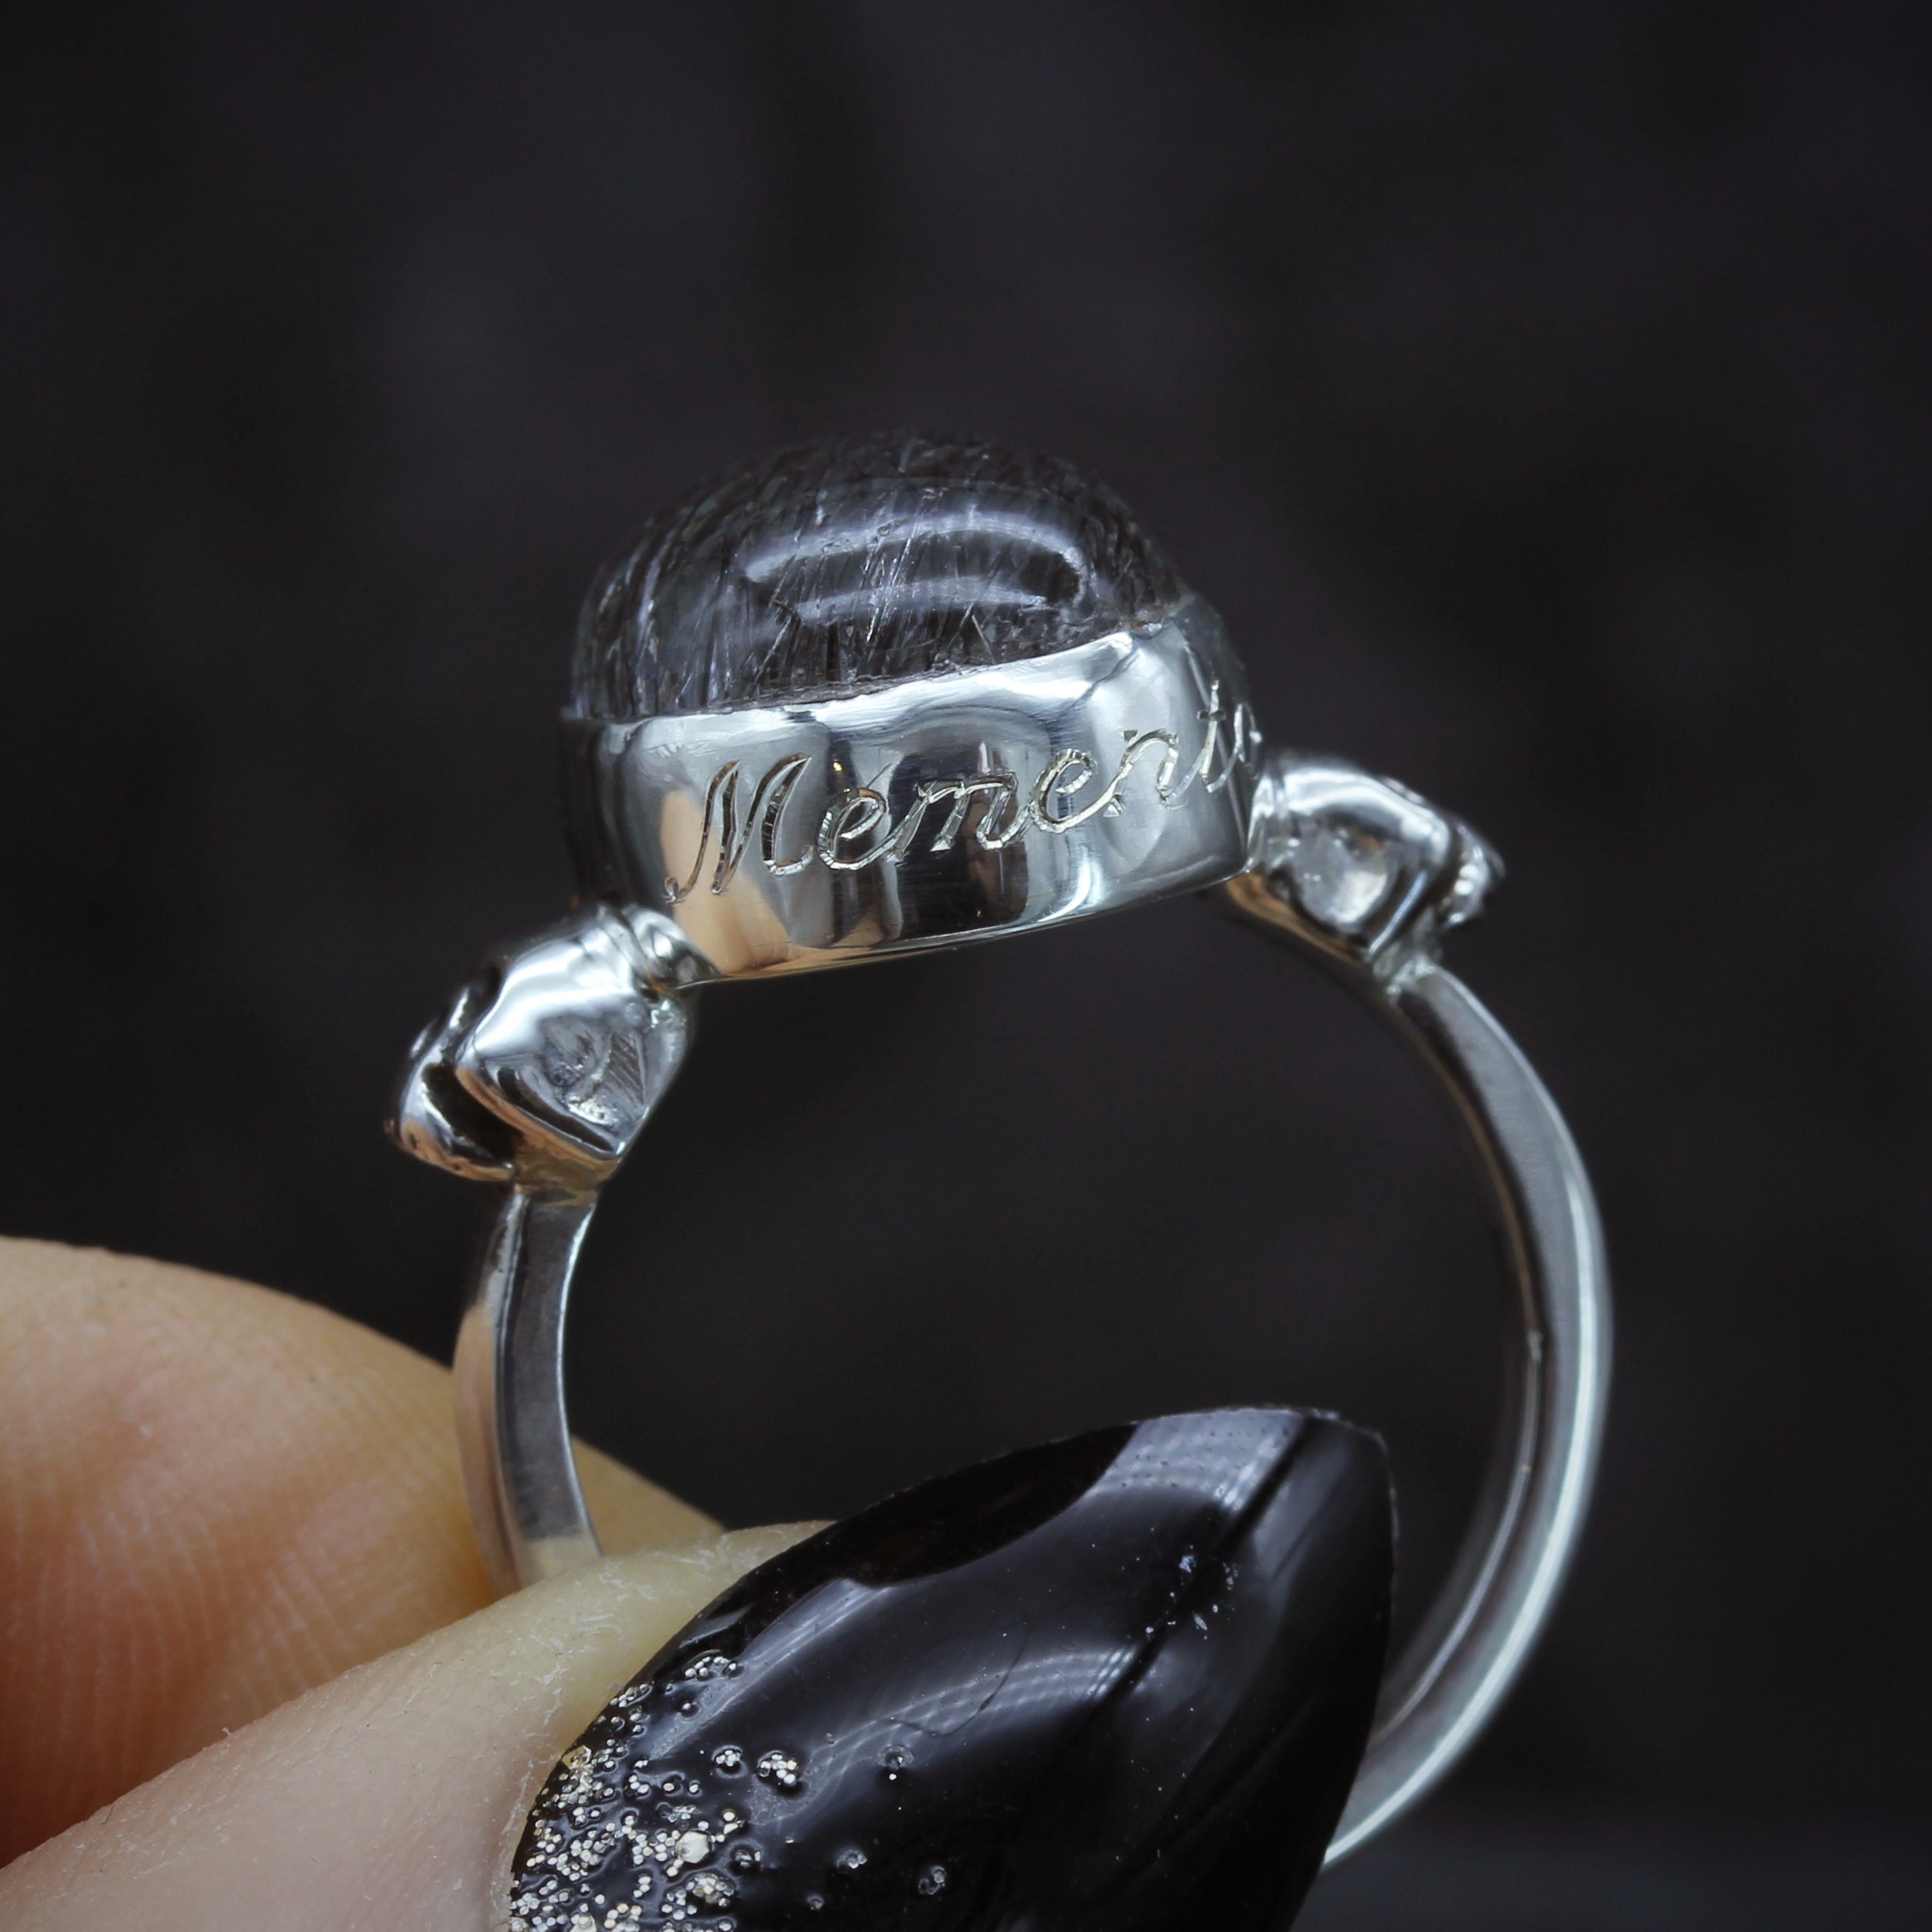 Memento Mori Ring